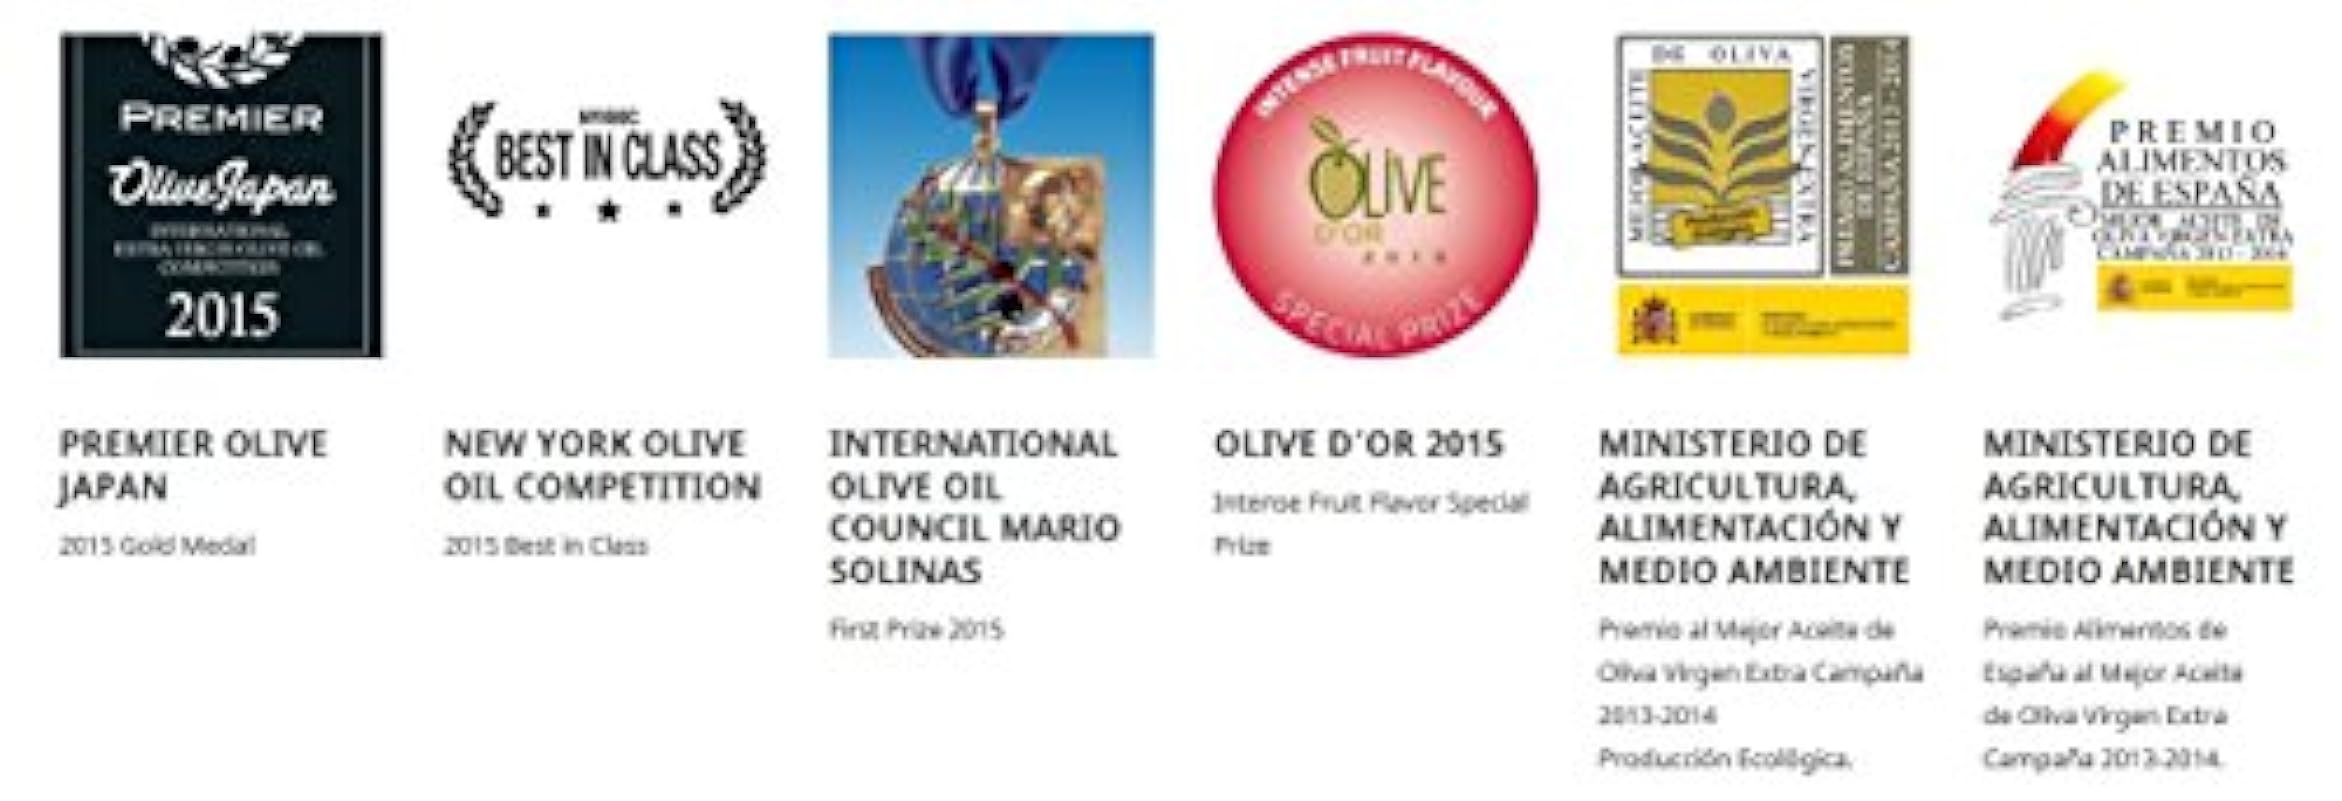 Finca la Torre UNO - Olio extra vergine di oliva biologico Hojiblanca 500 ml